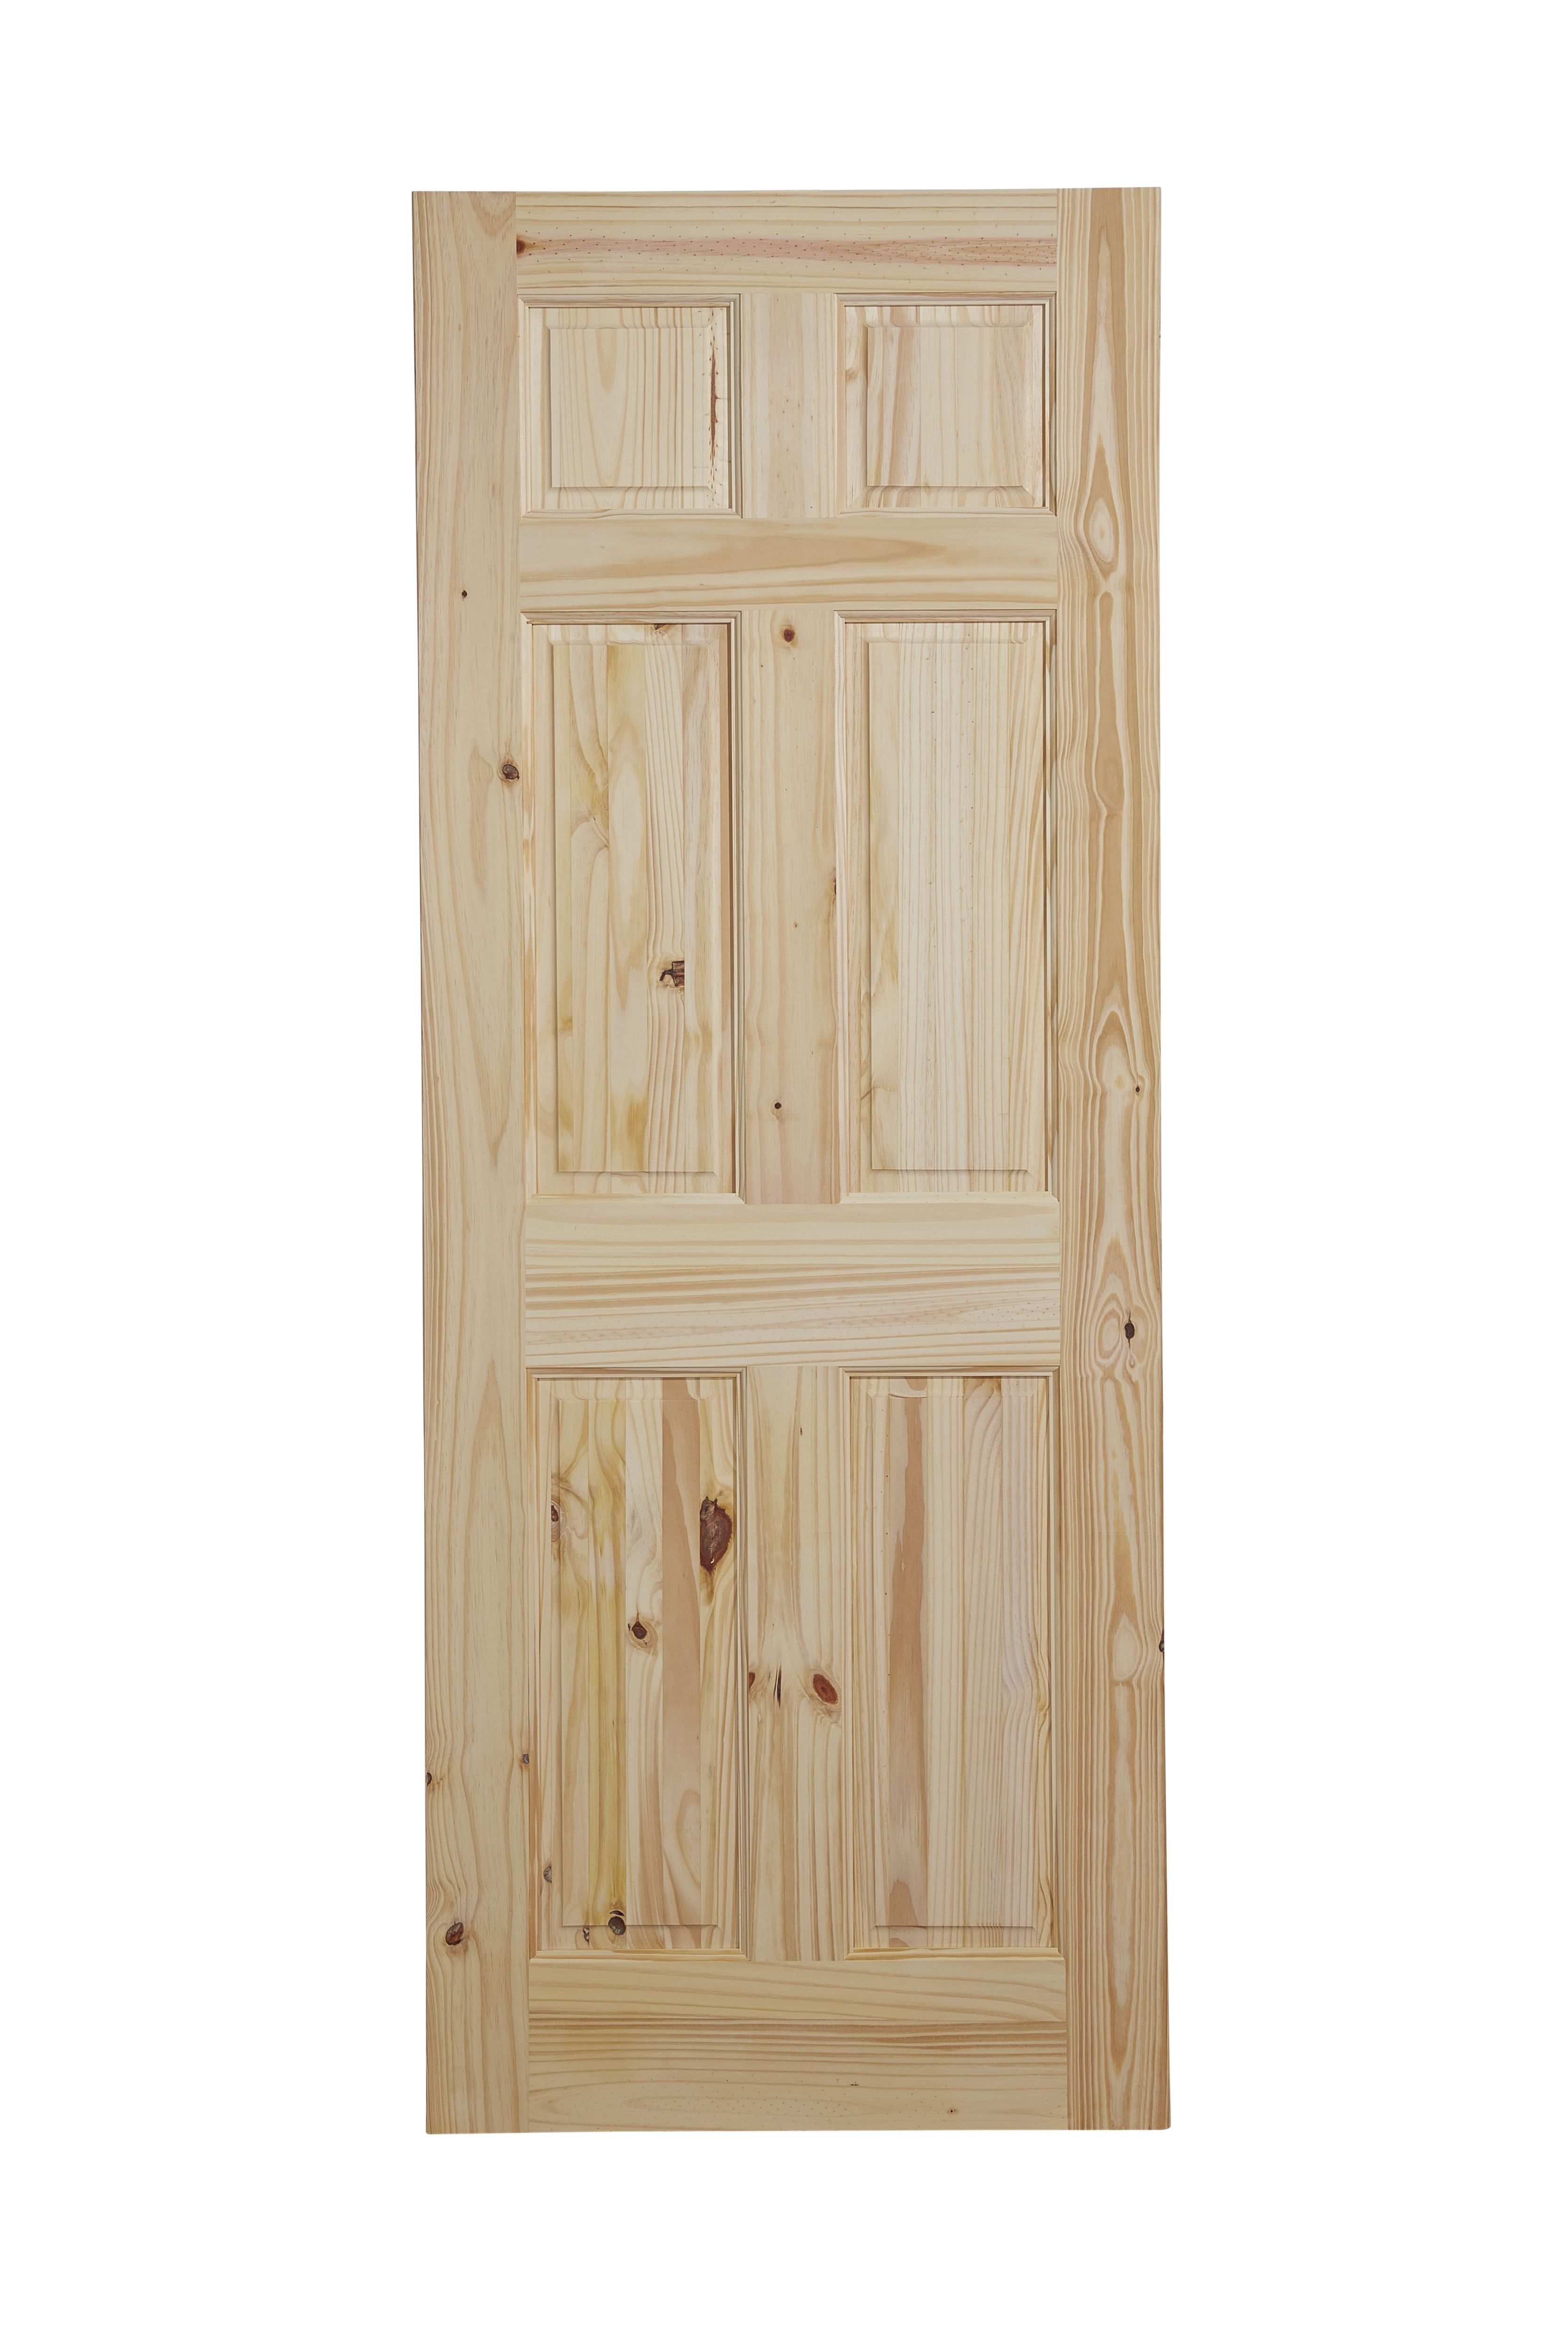 6 Panel Knotty Pine Lh Rh Internal Door H 2040mm W 826mm Departments Diy At B Q